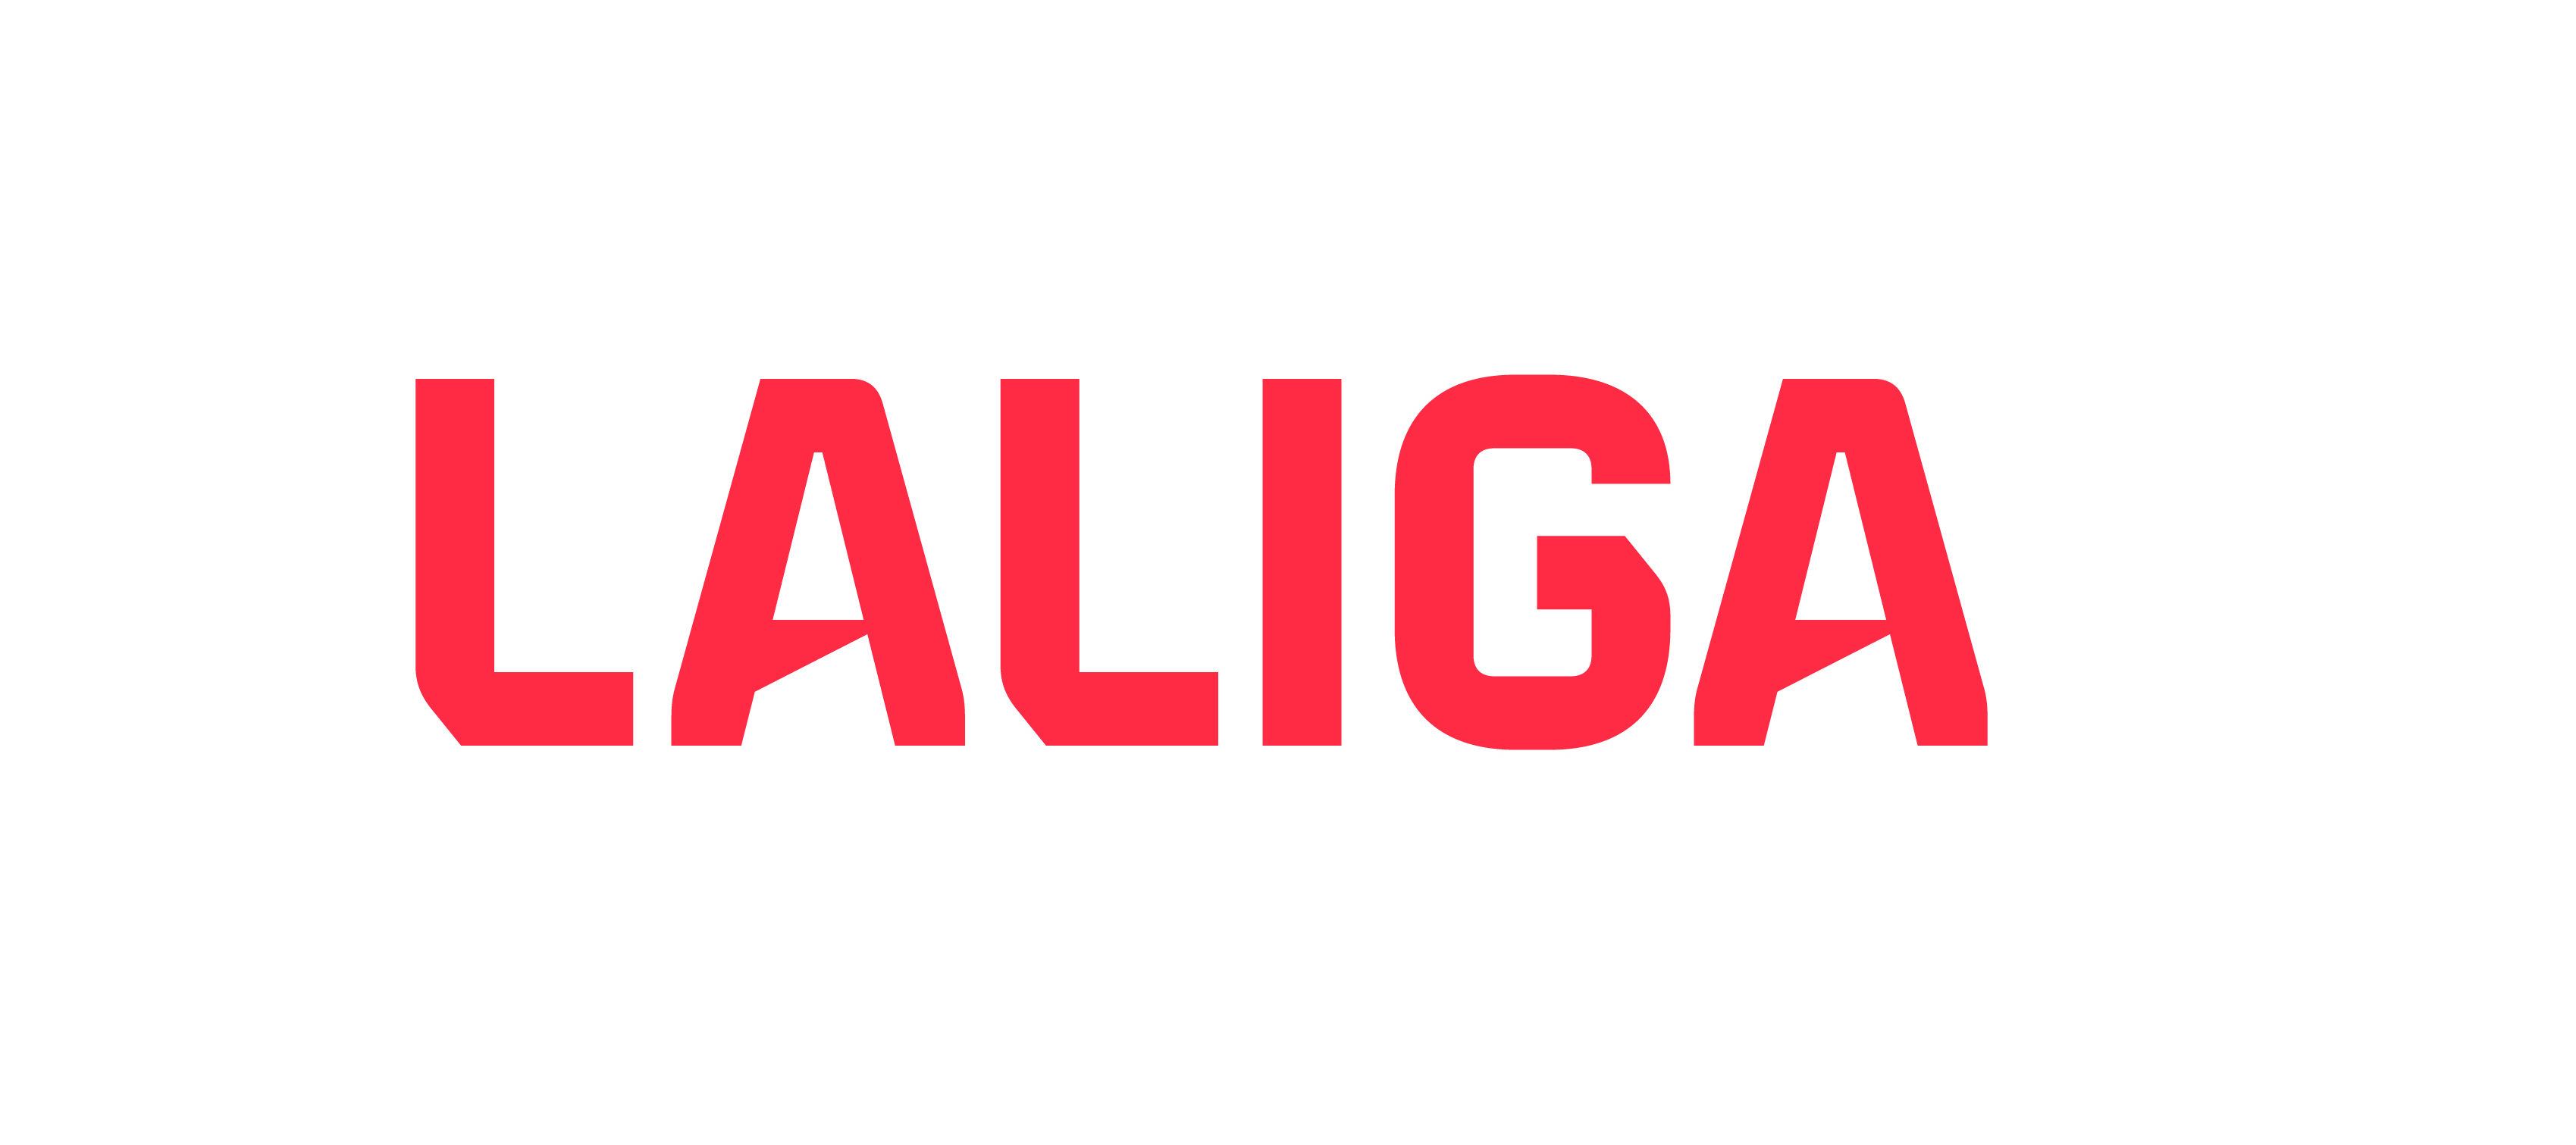 Пример шрифта LALIGA Text